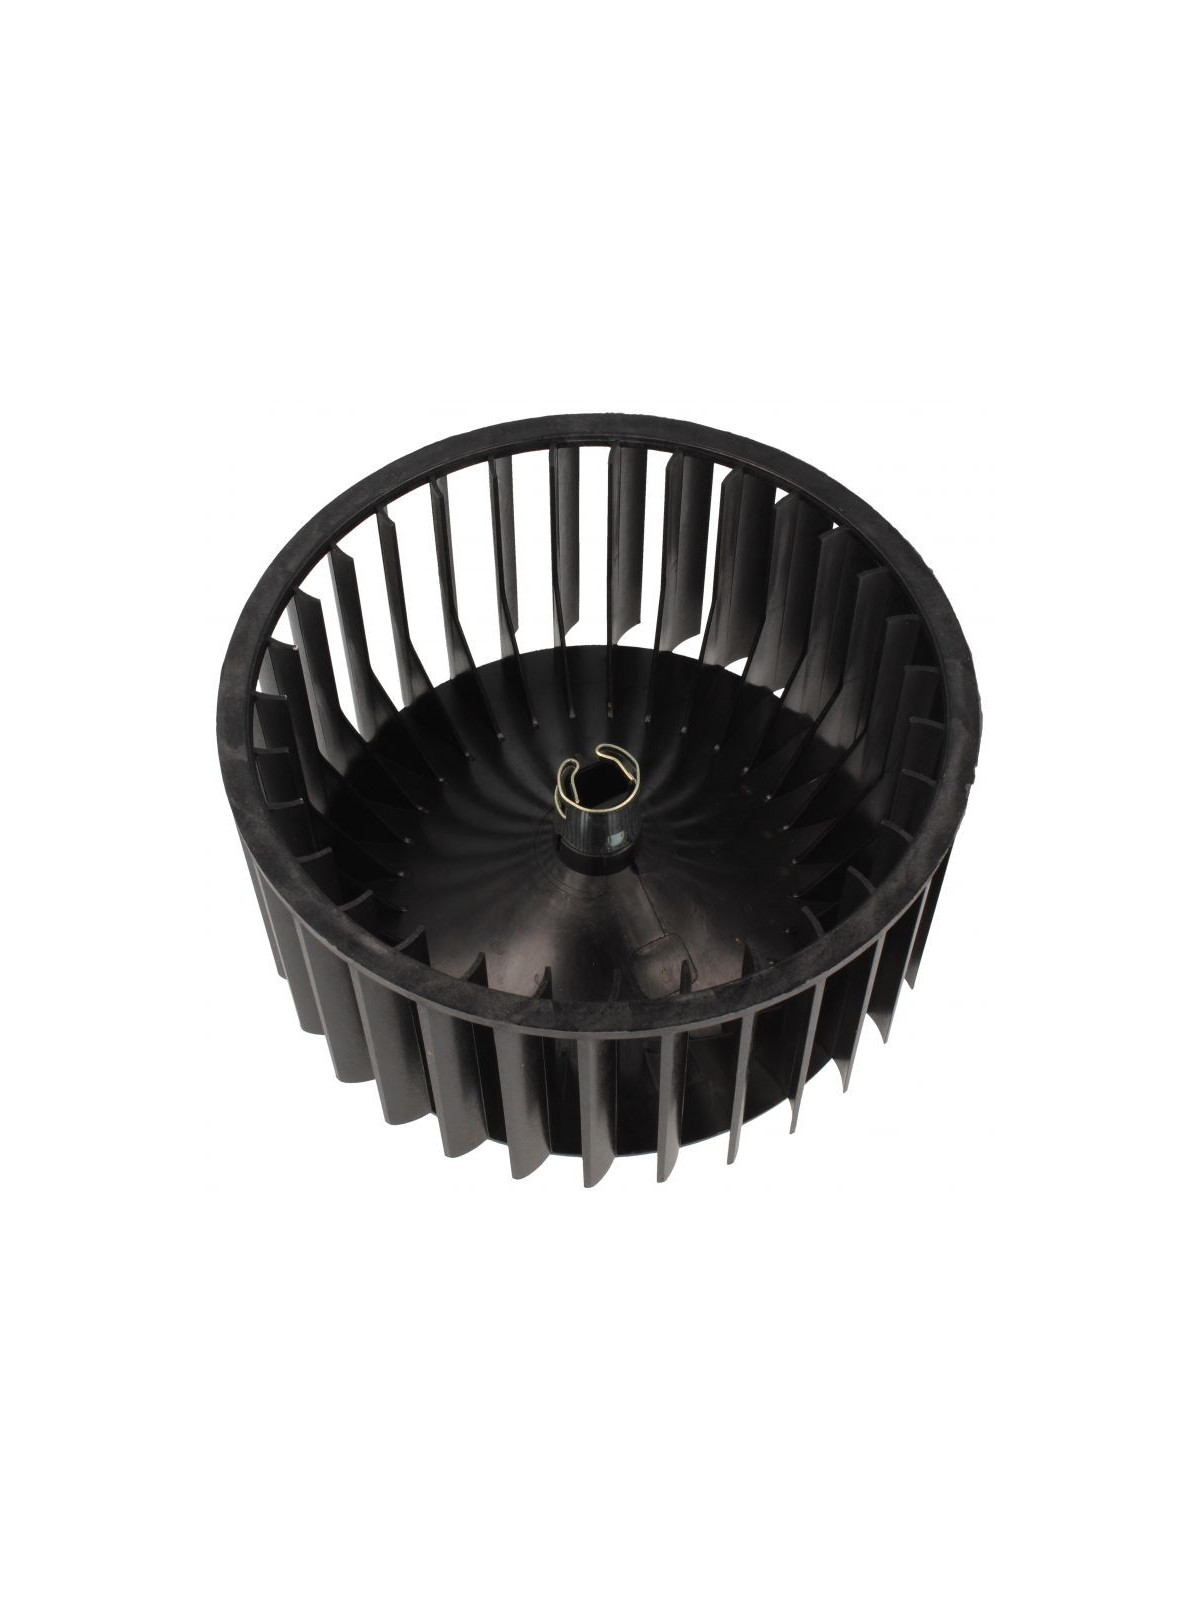 Turbine ventilateur Whirlpool AWZ3416 - Sèche linge